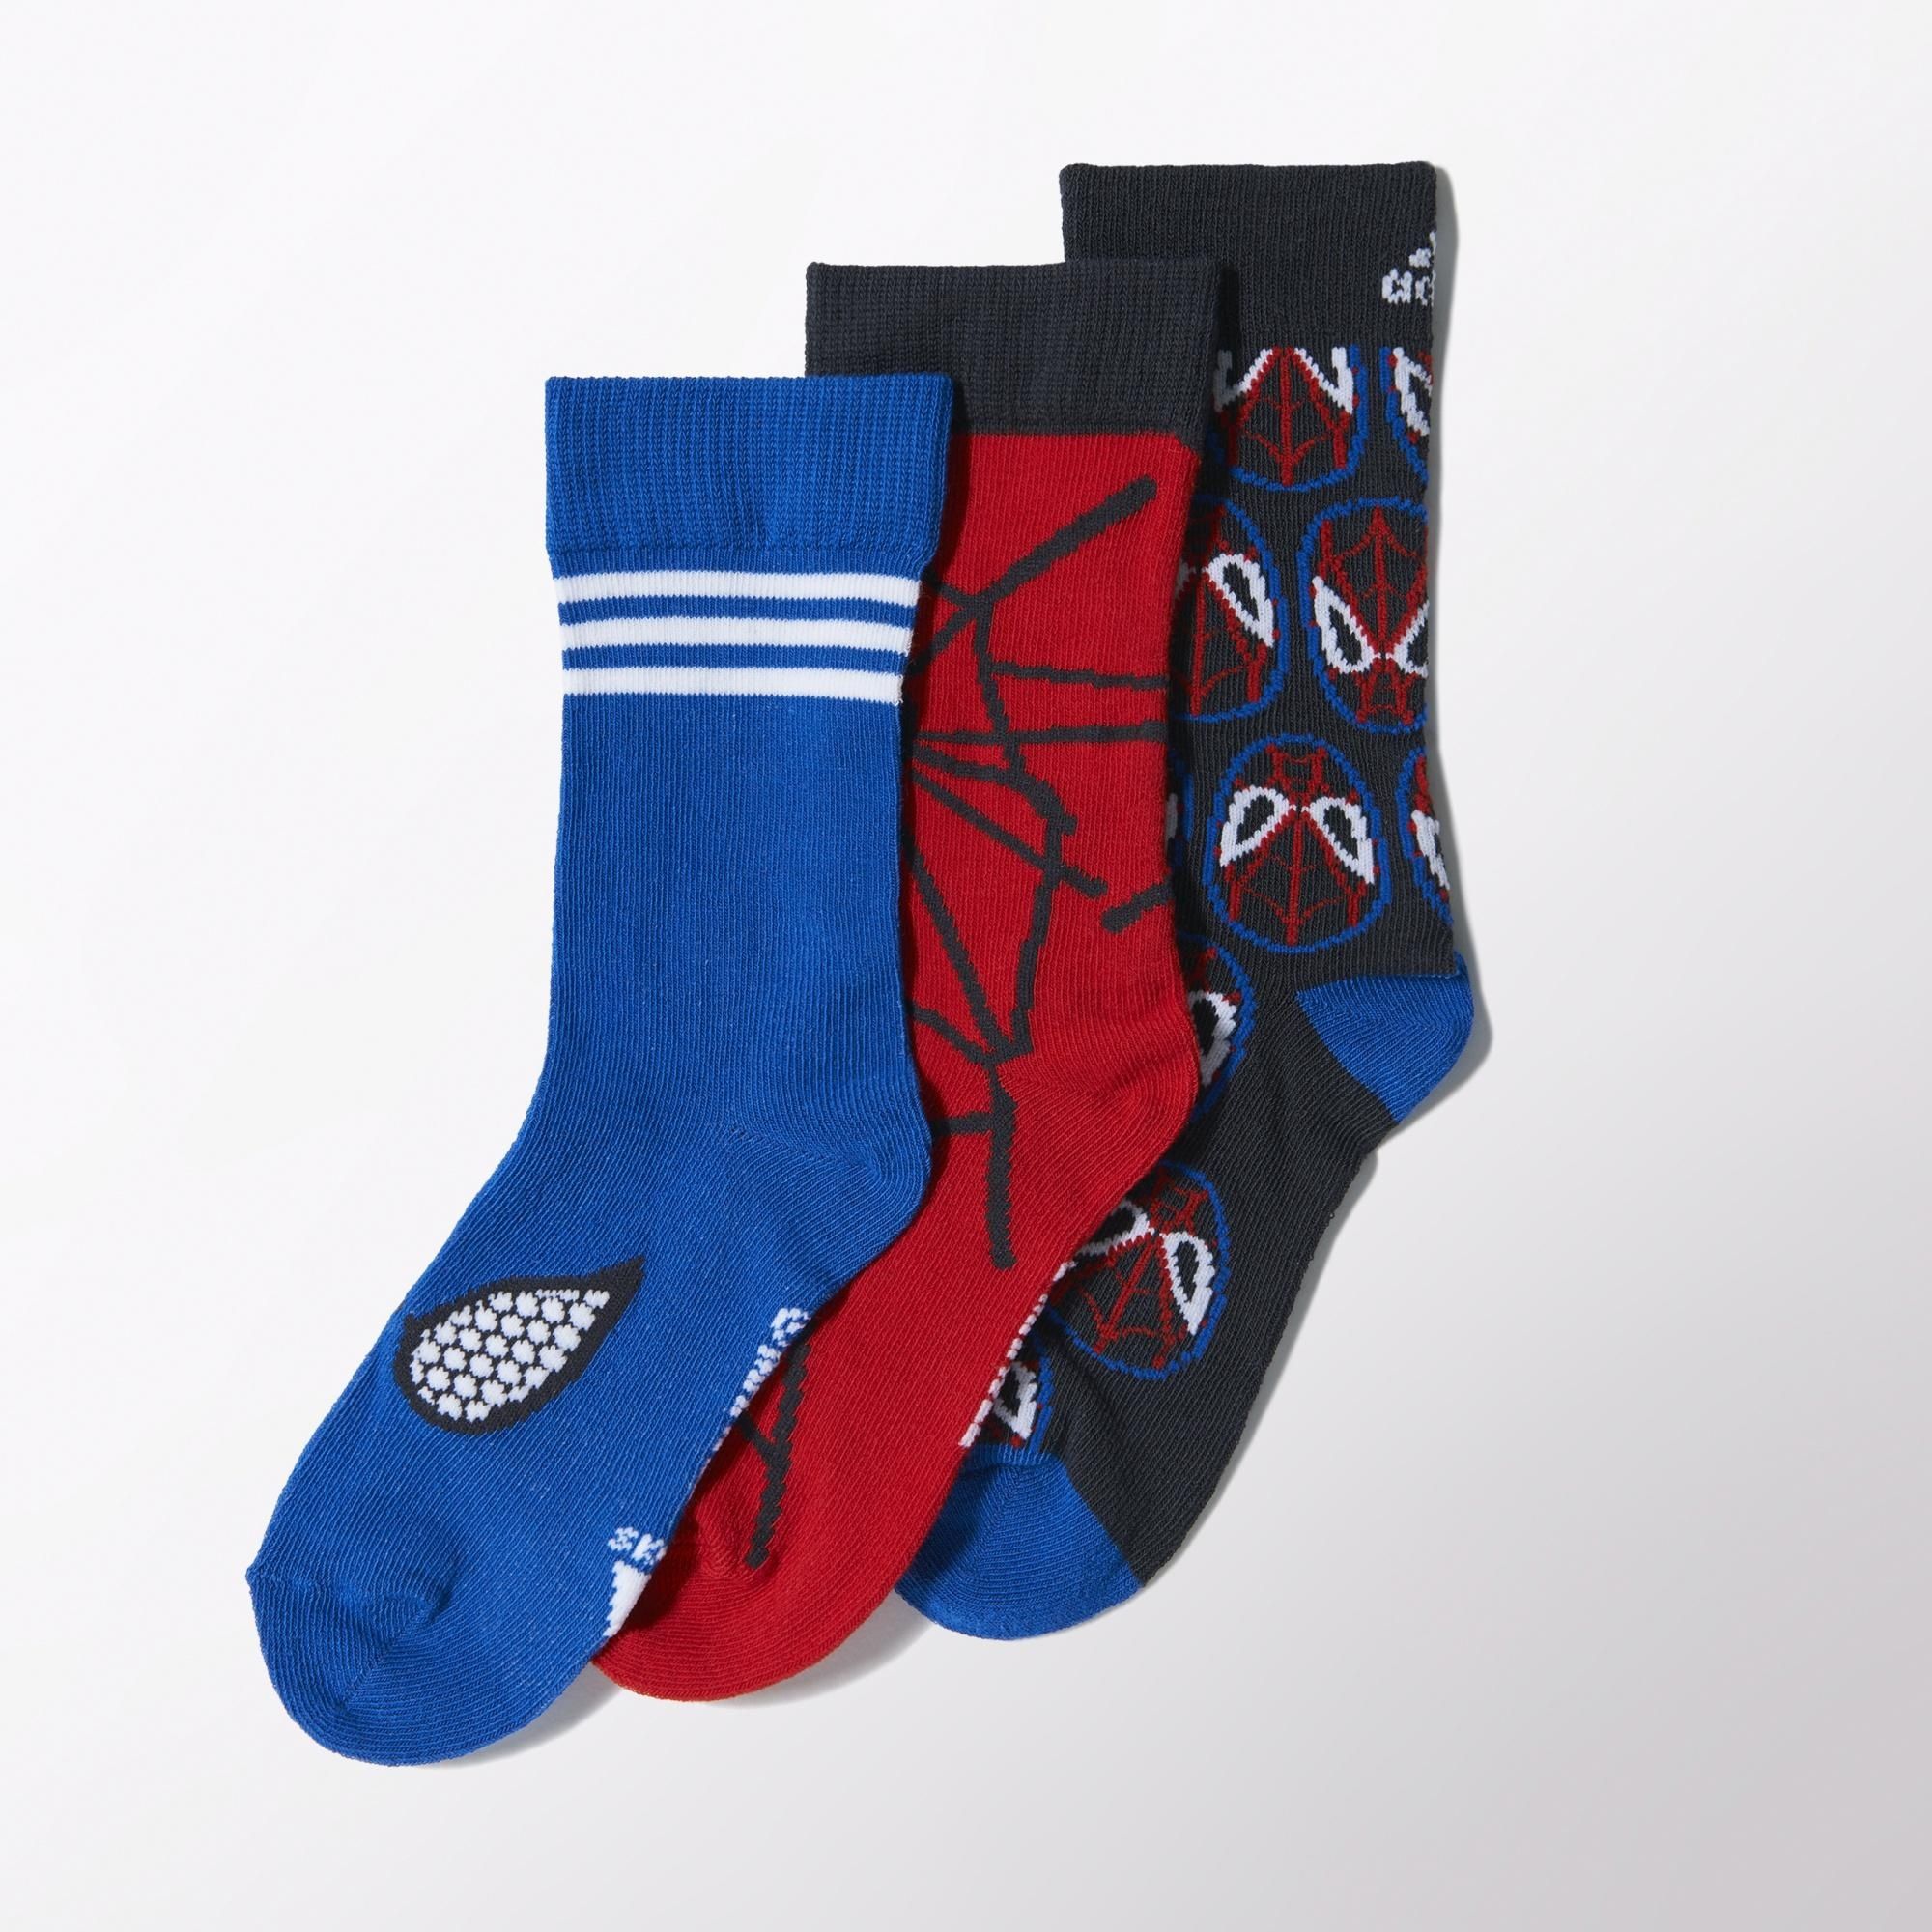 Adidas Calcetines Niño Spider-Man (azul/rojo/marino)